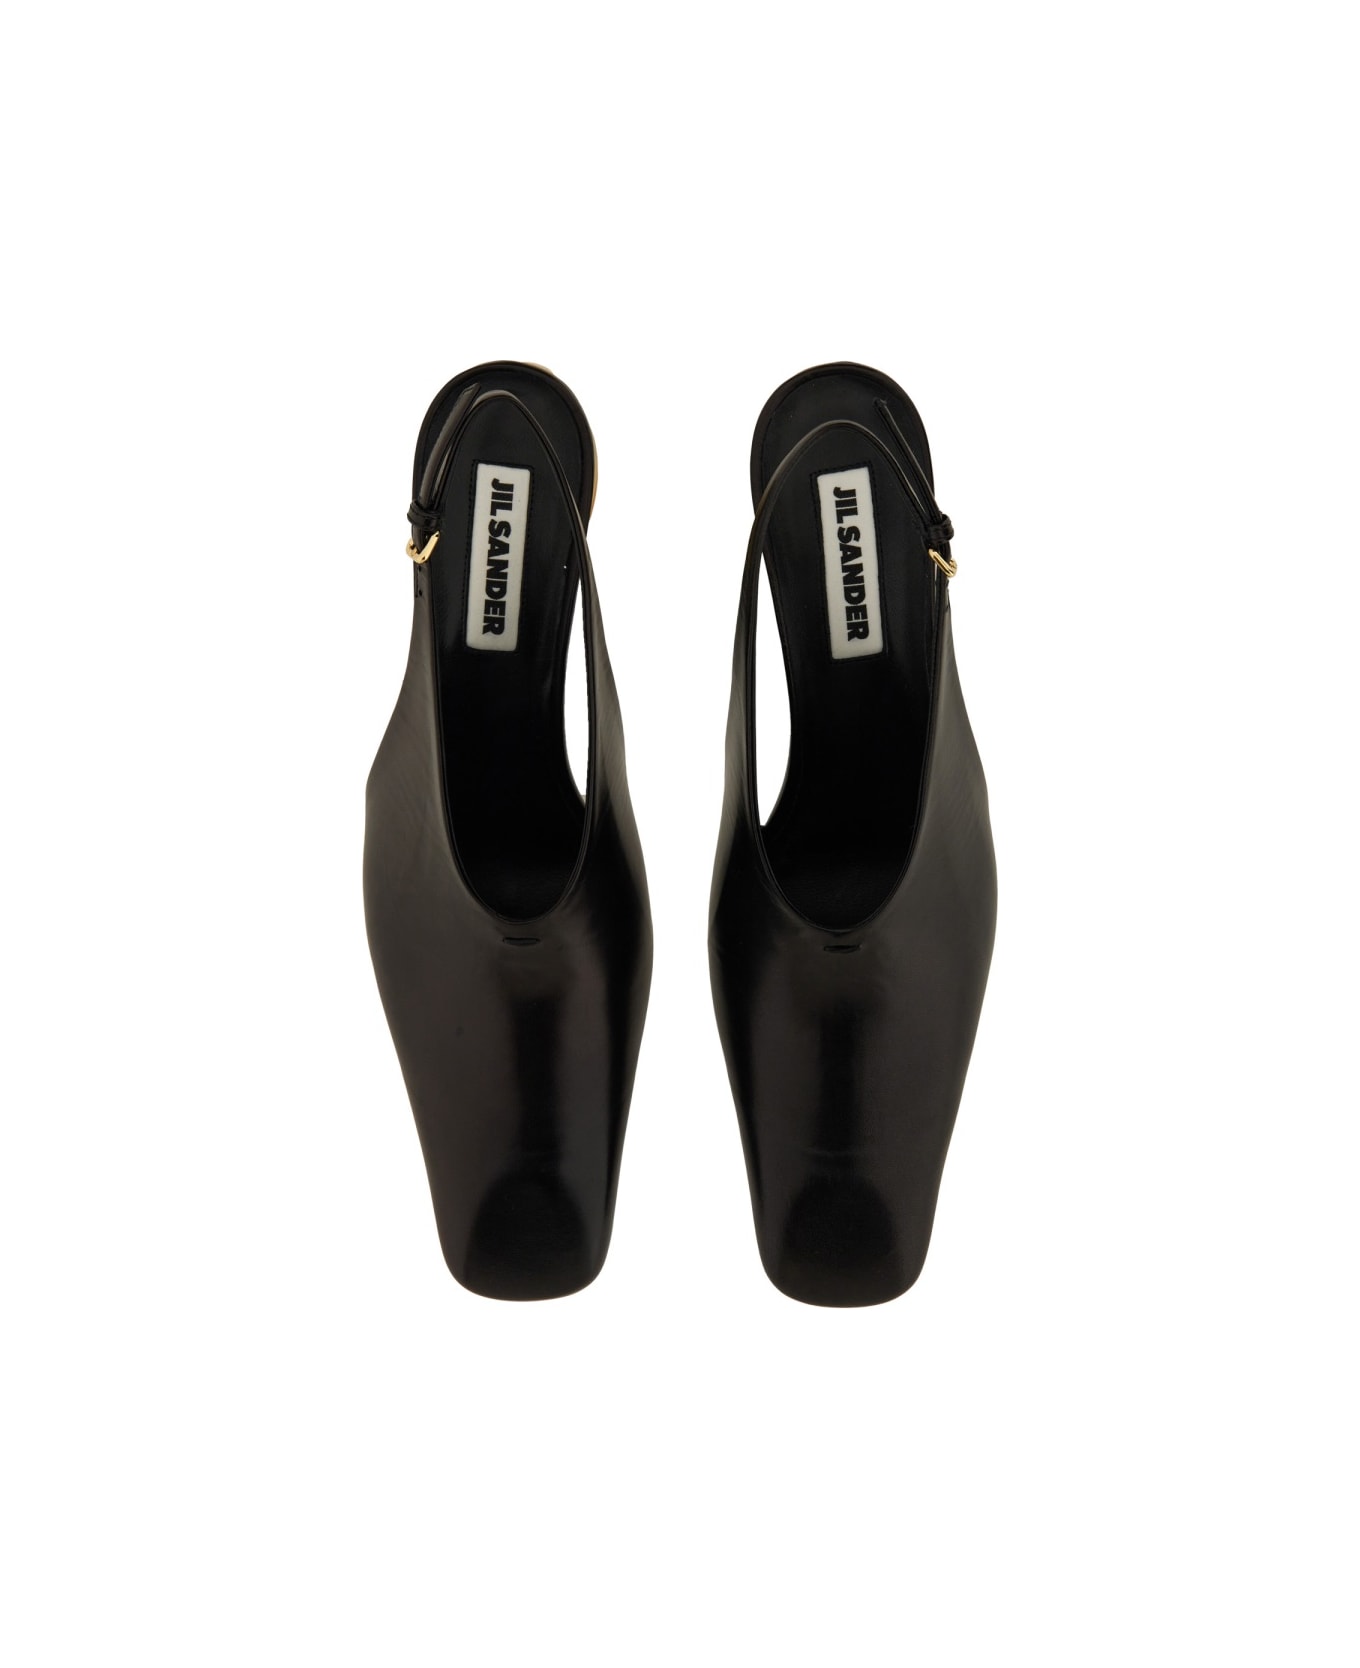 Jil Sander Pumps With Contrasting Heels - BLACK サンダル